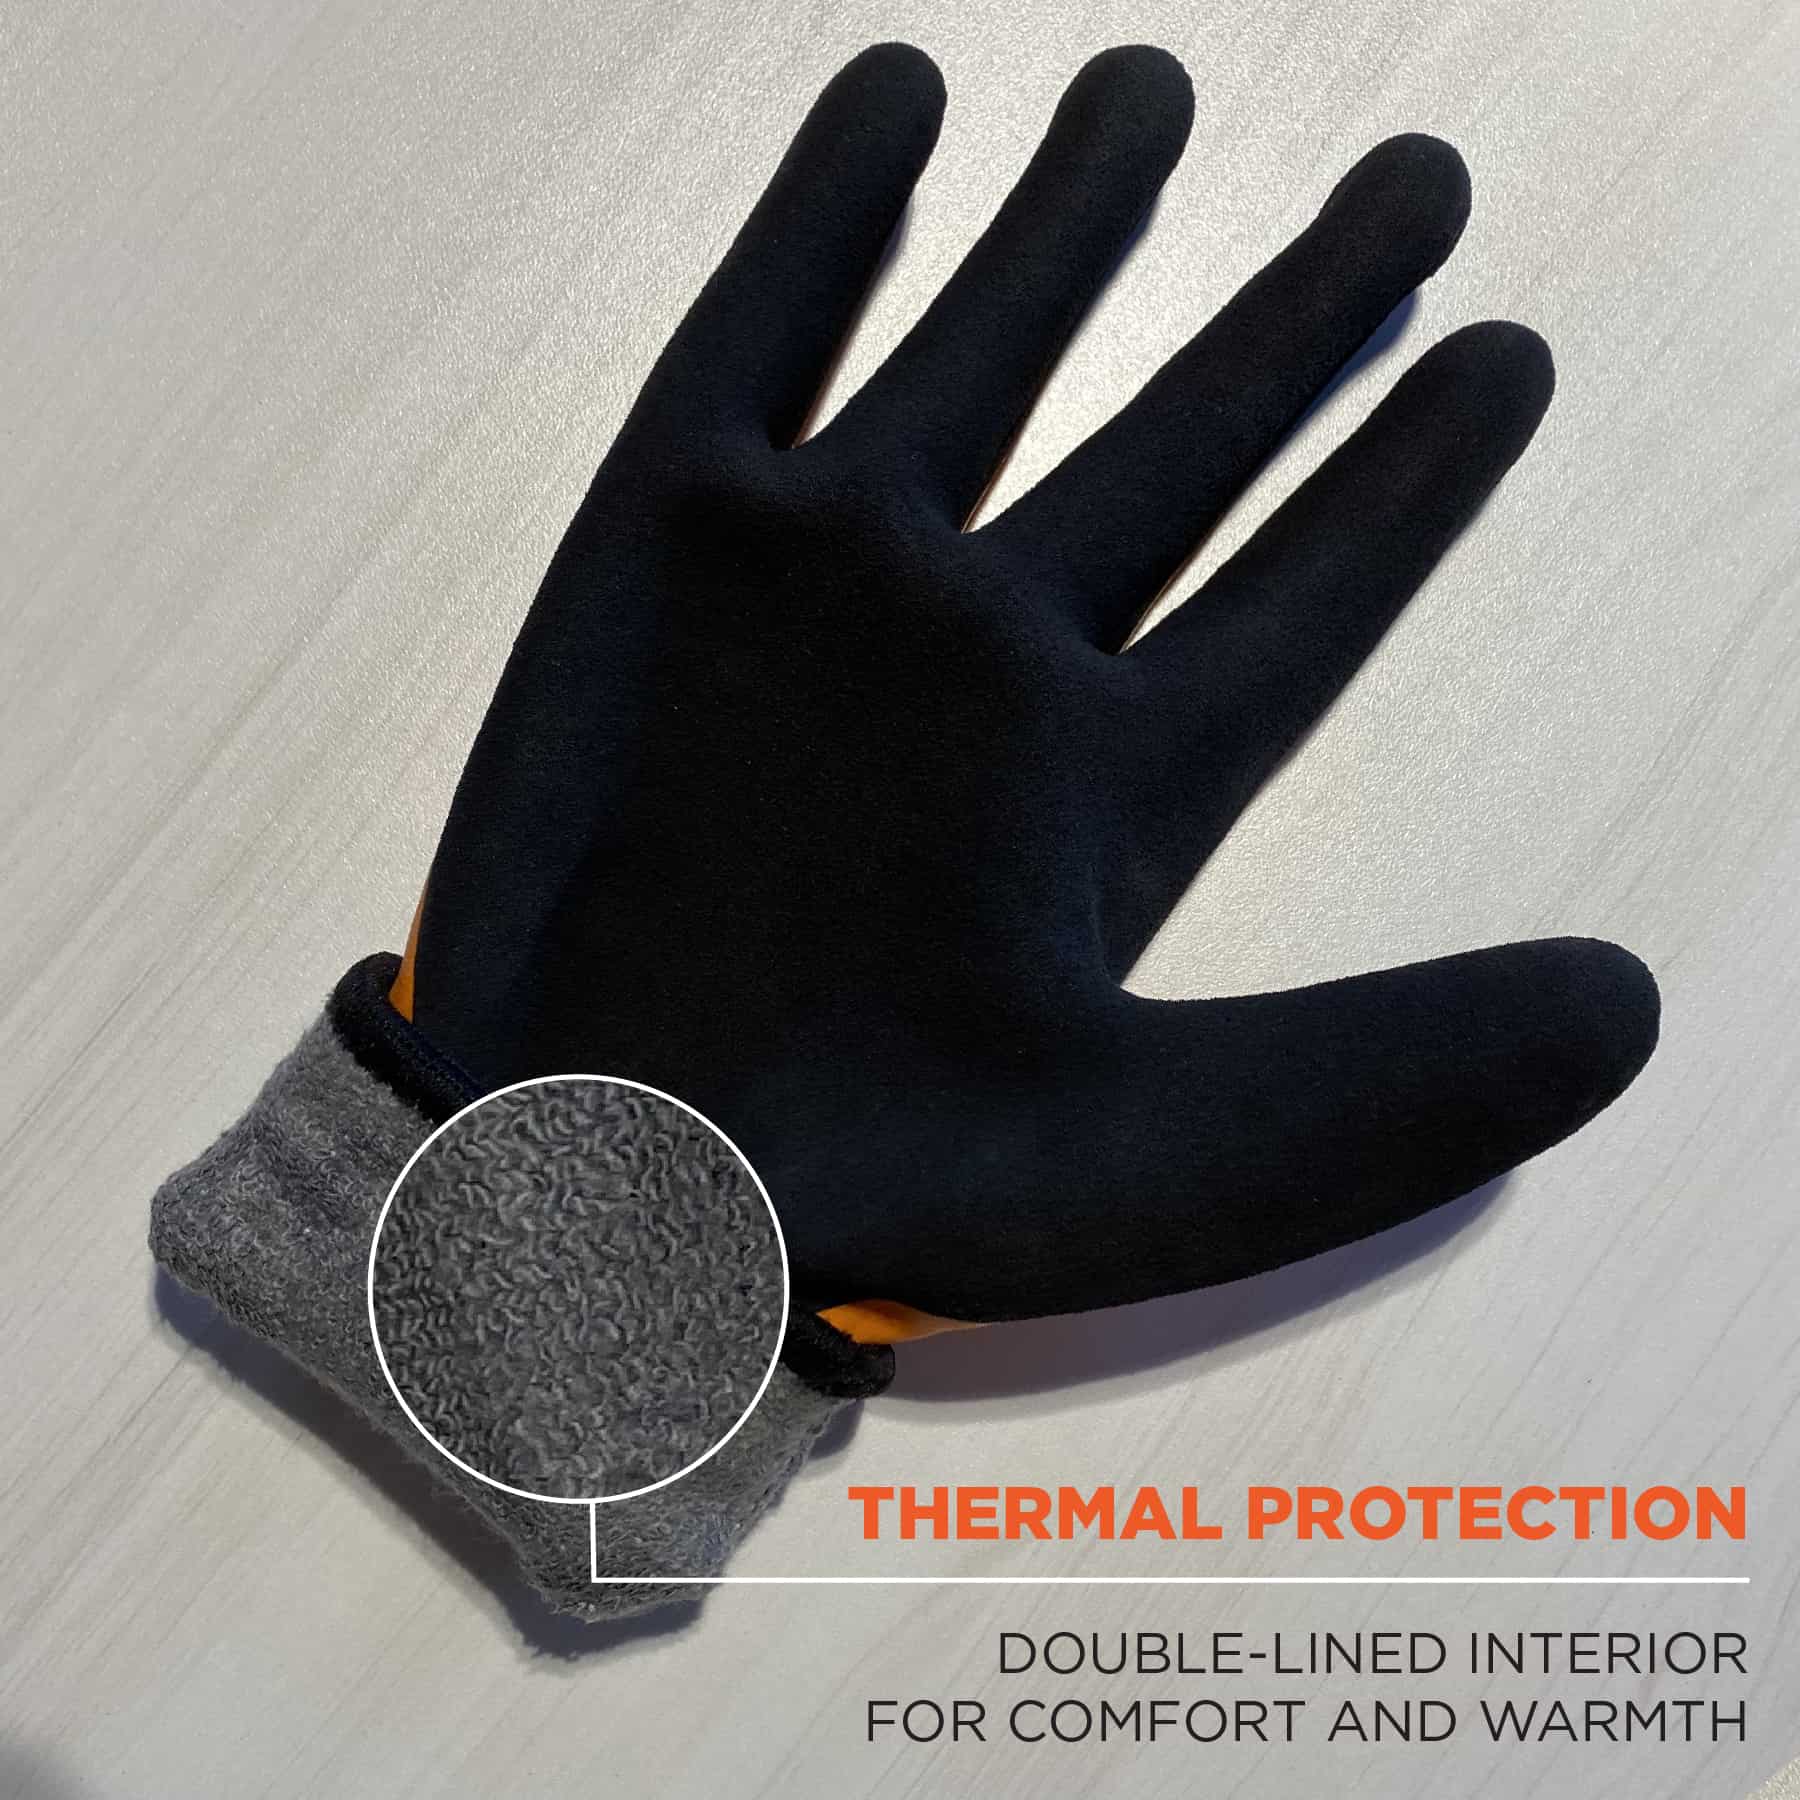 https://www.ergodyne.com/sites/default/files/product-images/17672-7551-coated-waterproof-winter-work-gloves-orange-thermal-protection_0.jpg